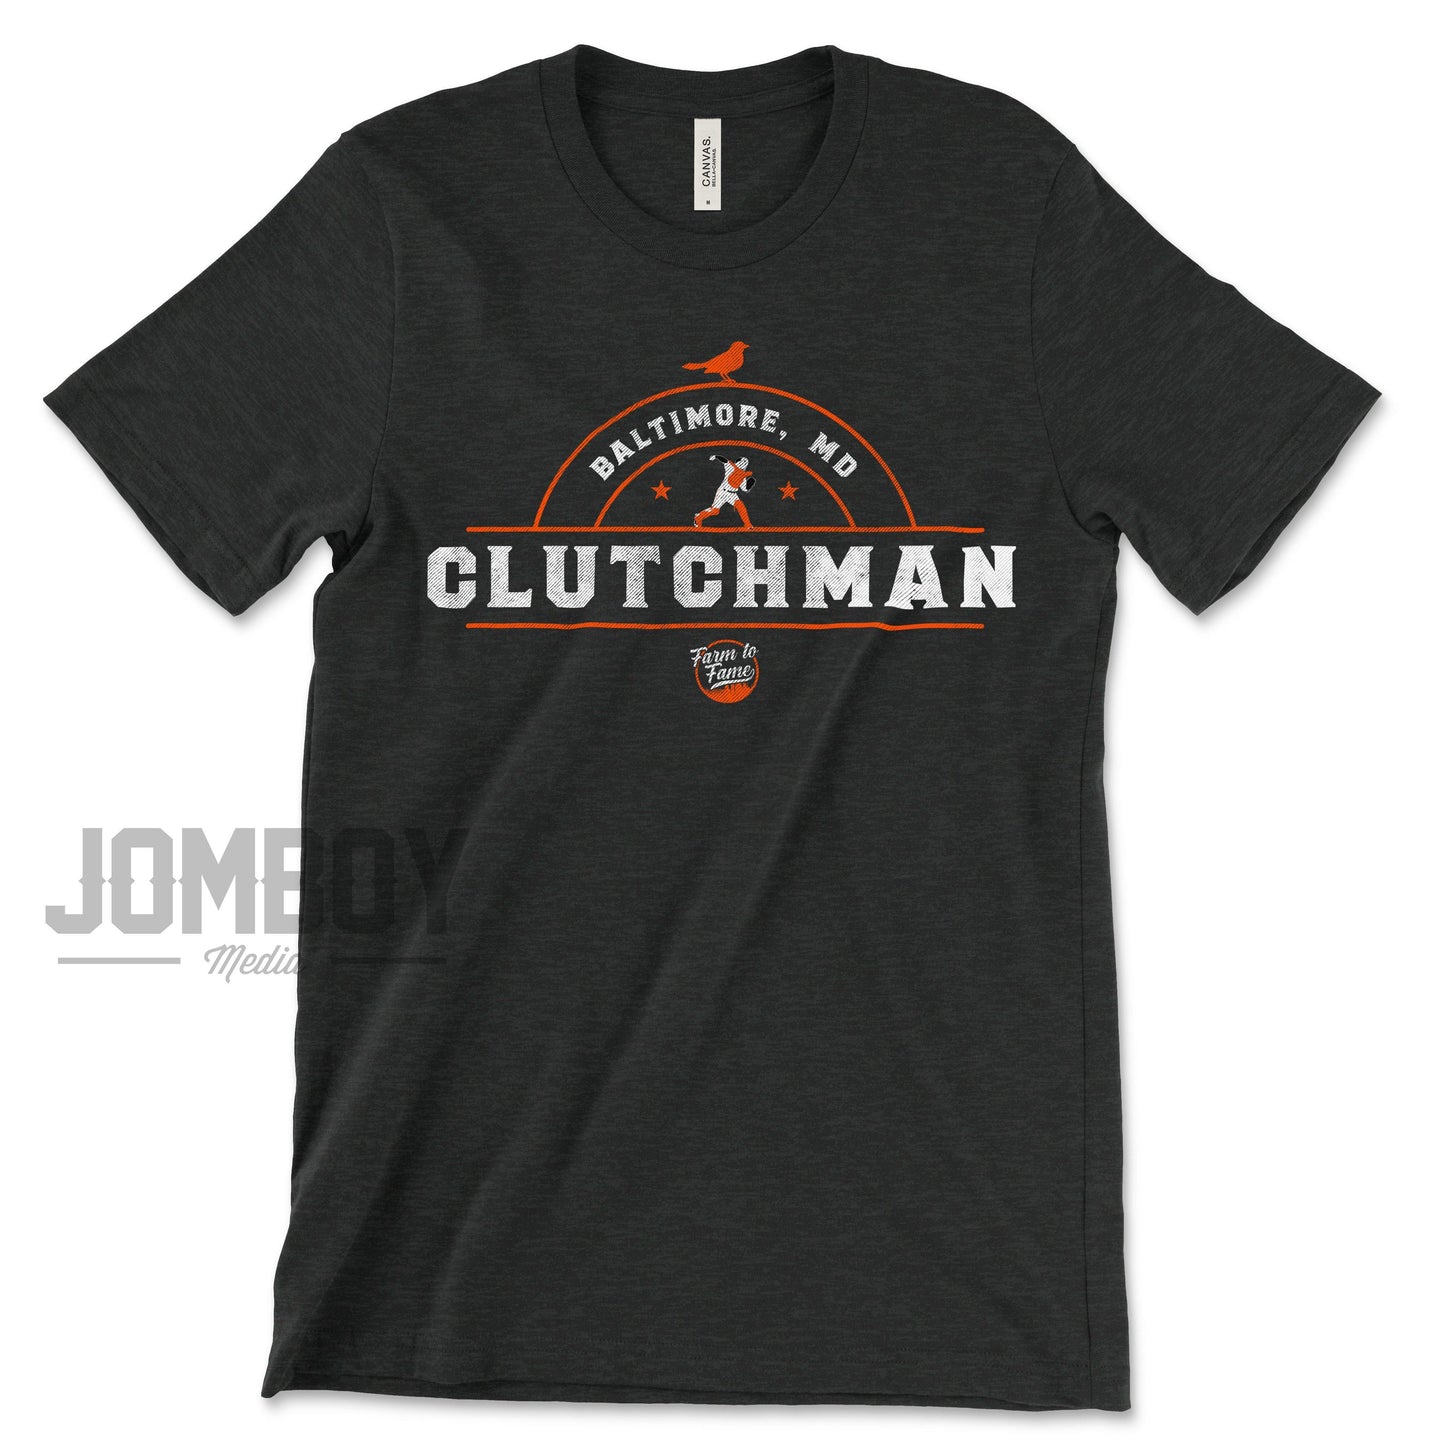 CLUTCHMAN | T-Shirt - Jomboy Media